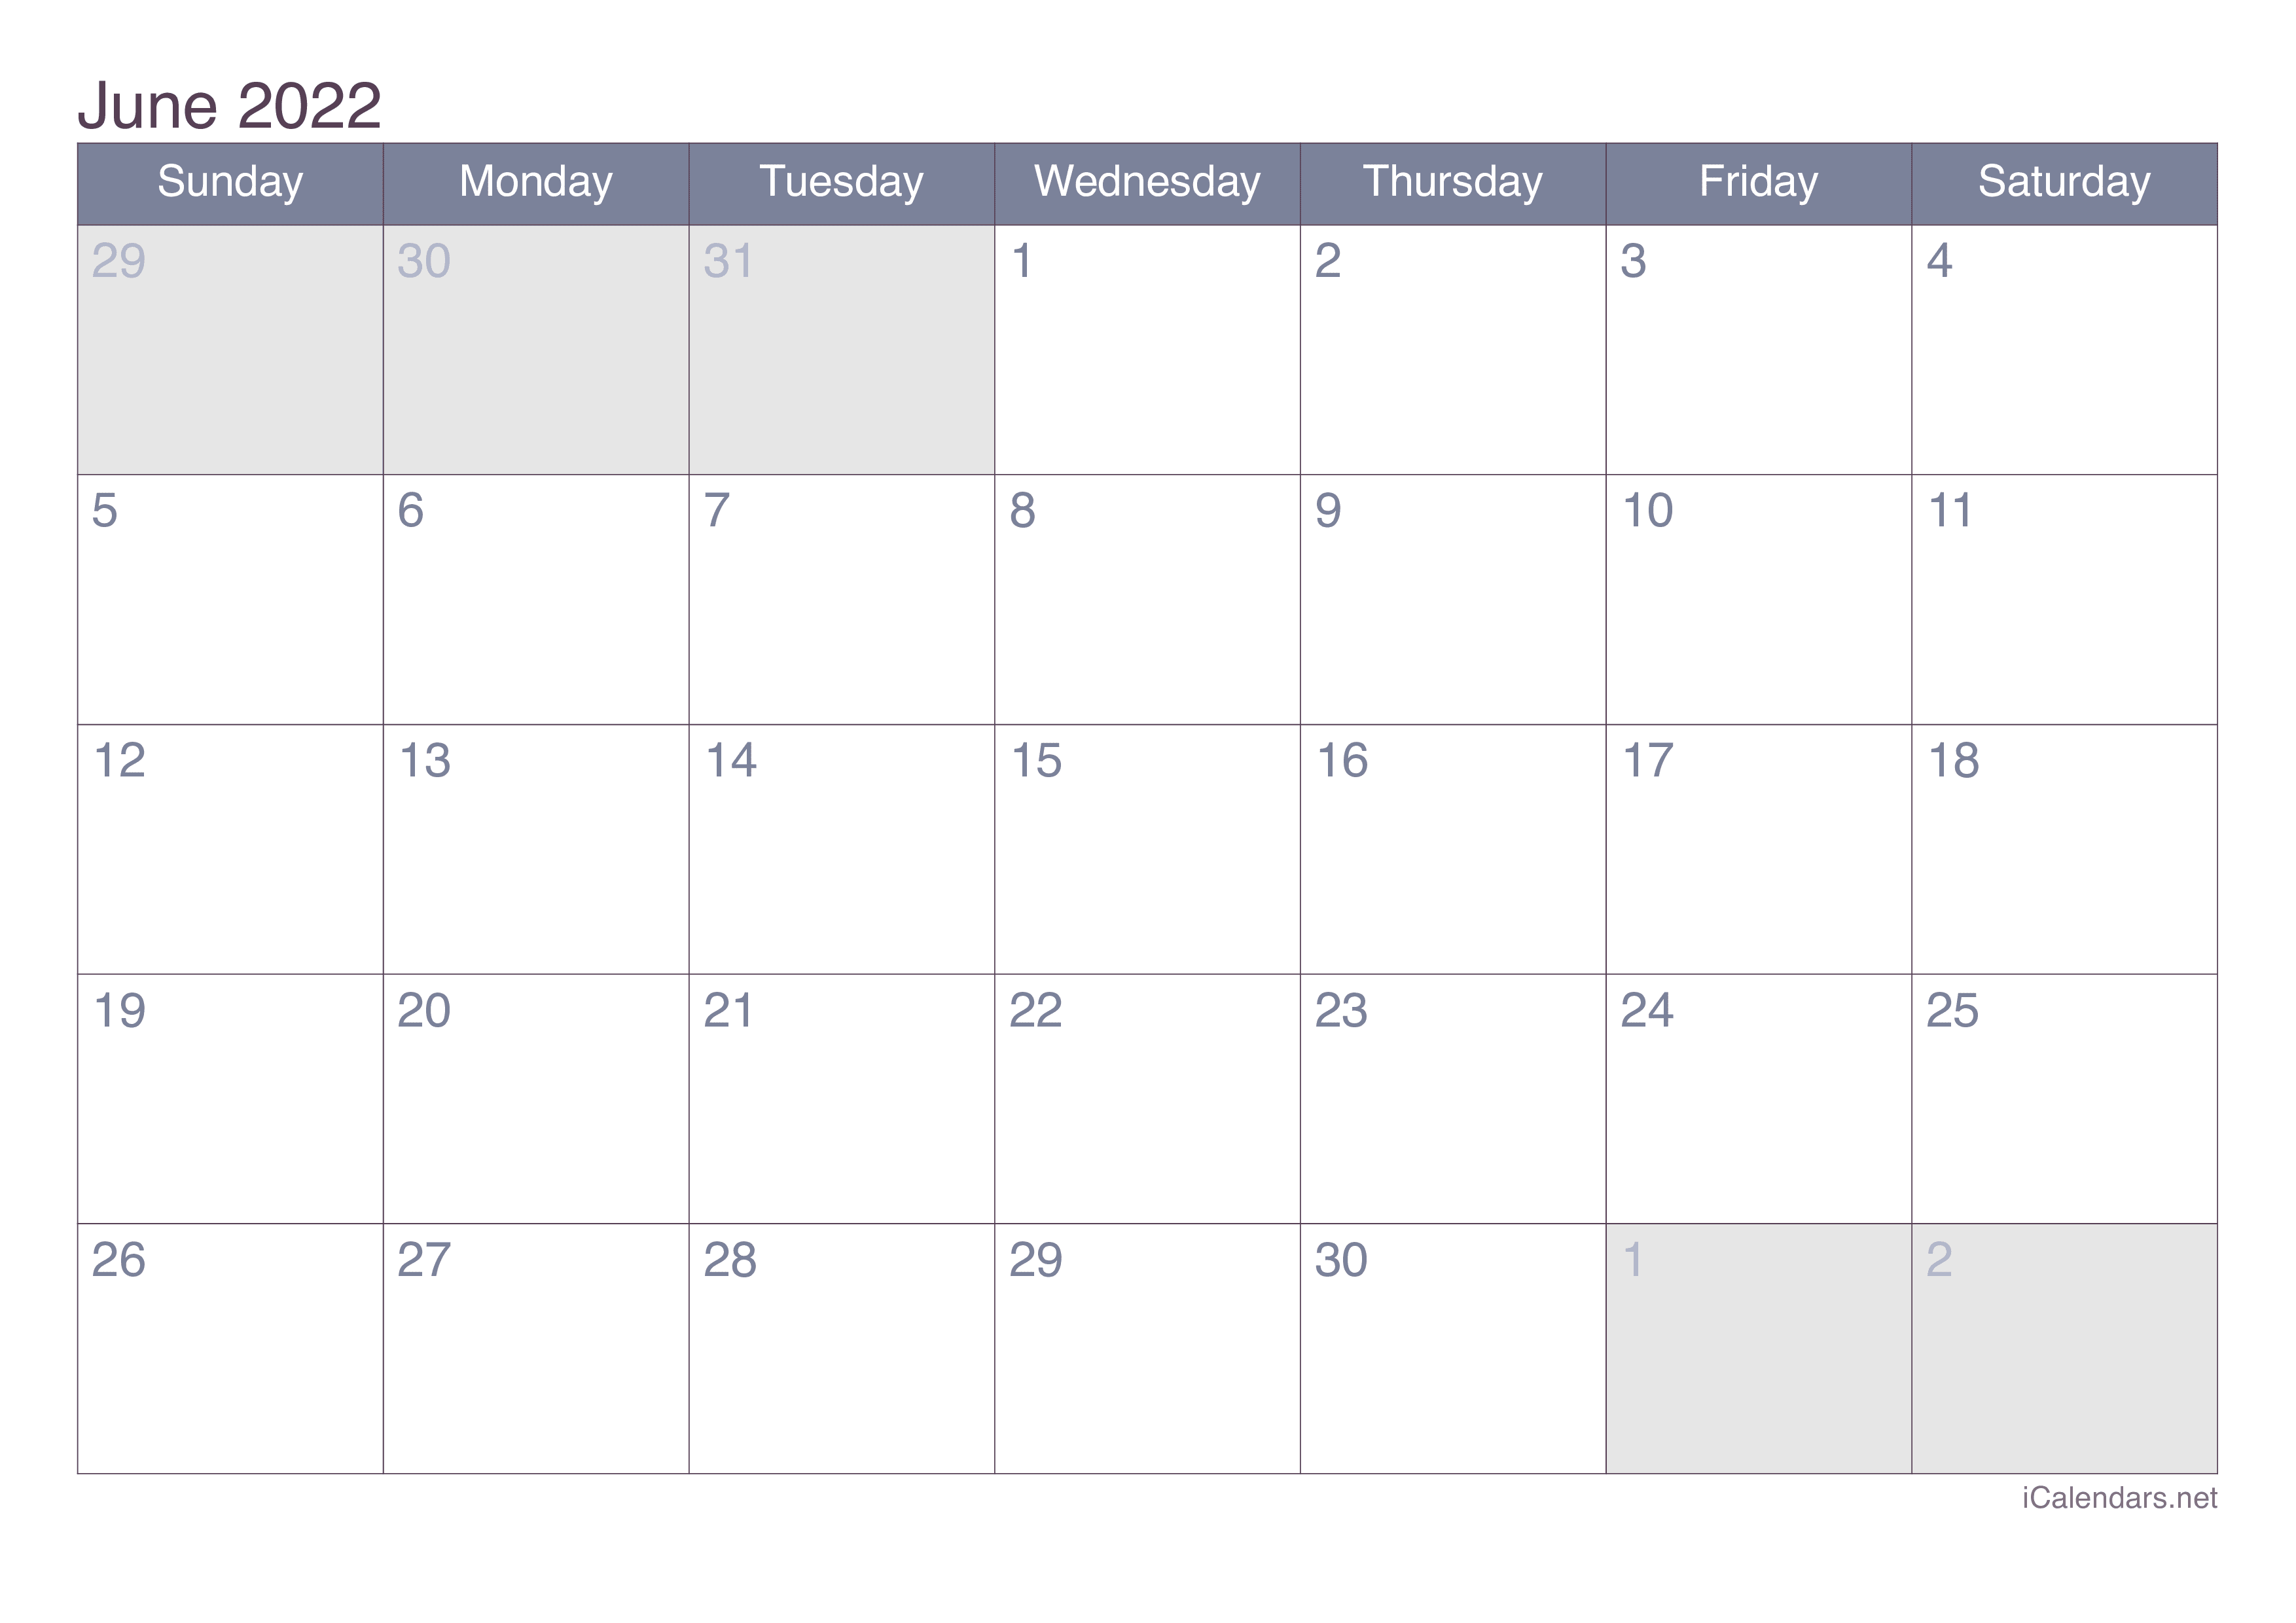 June 2022 Printable Calendar - icalendars.net